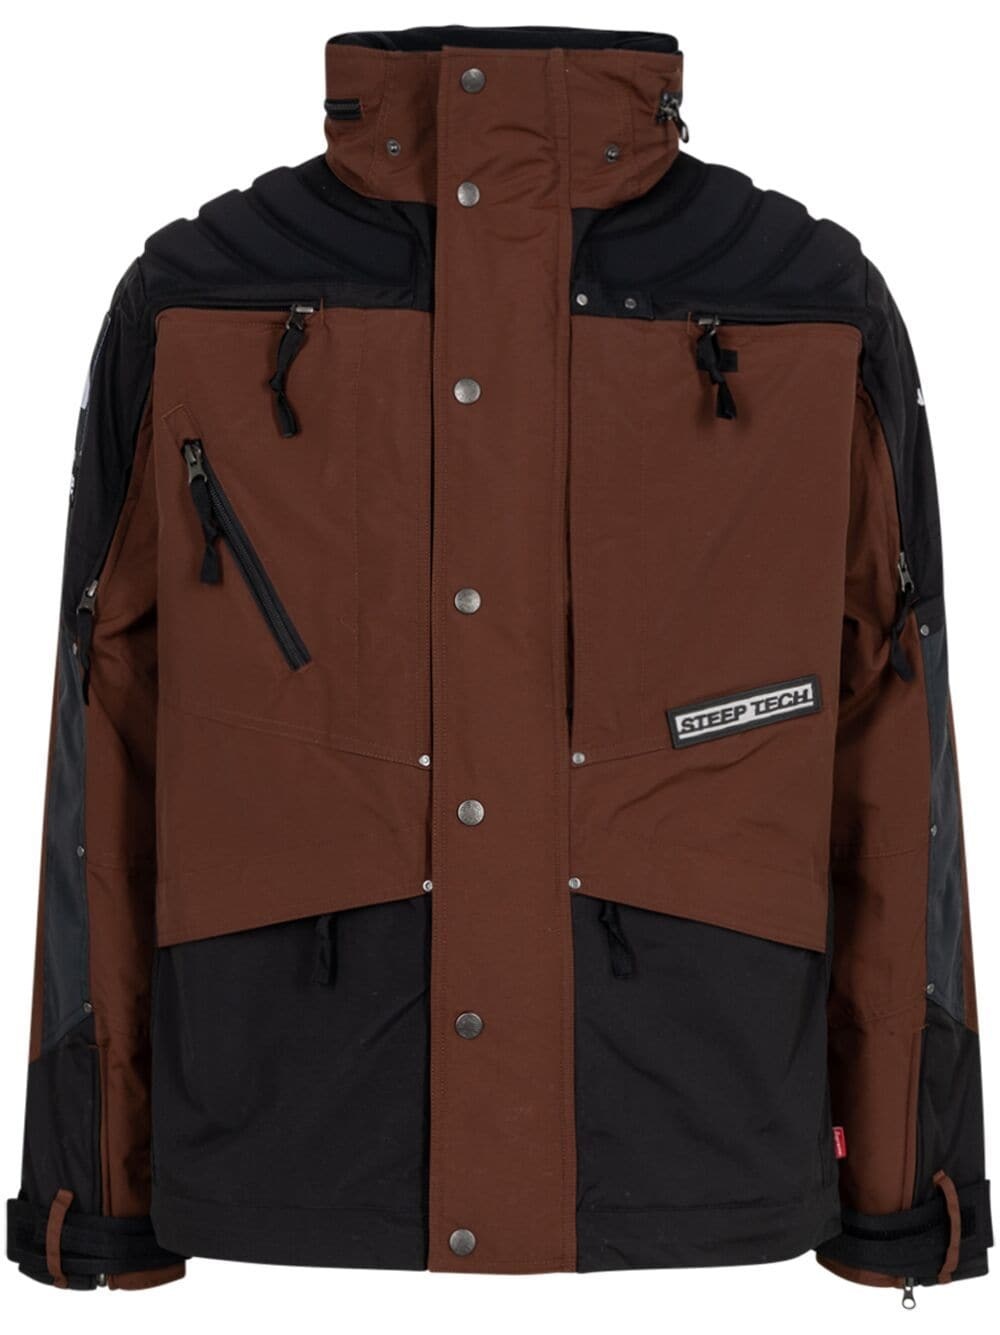 x The North Face Steep Tech Apogee jacket - 1